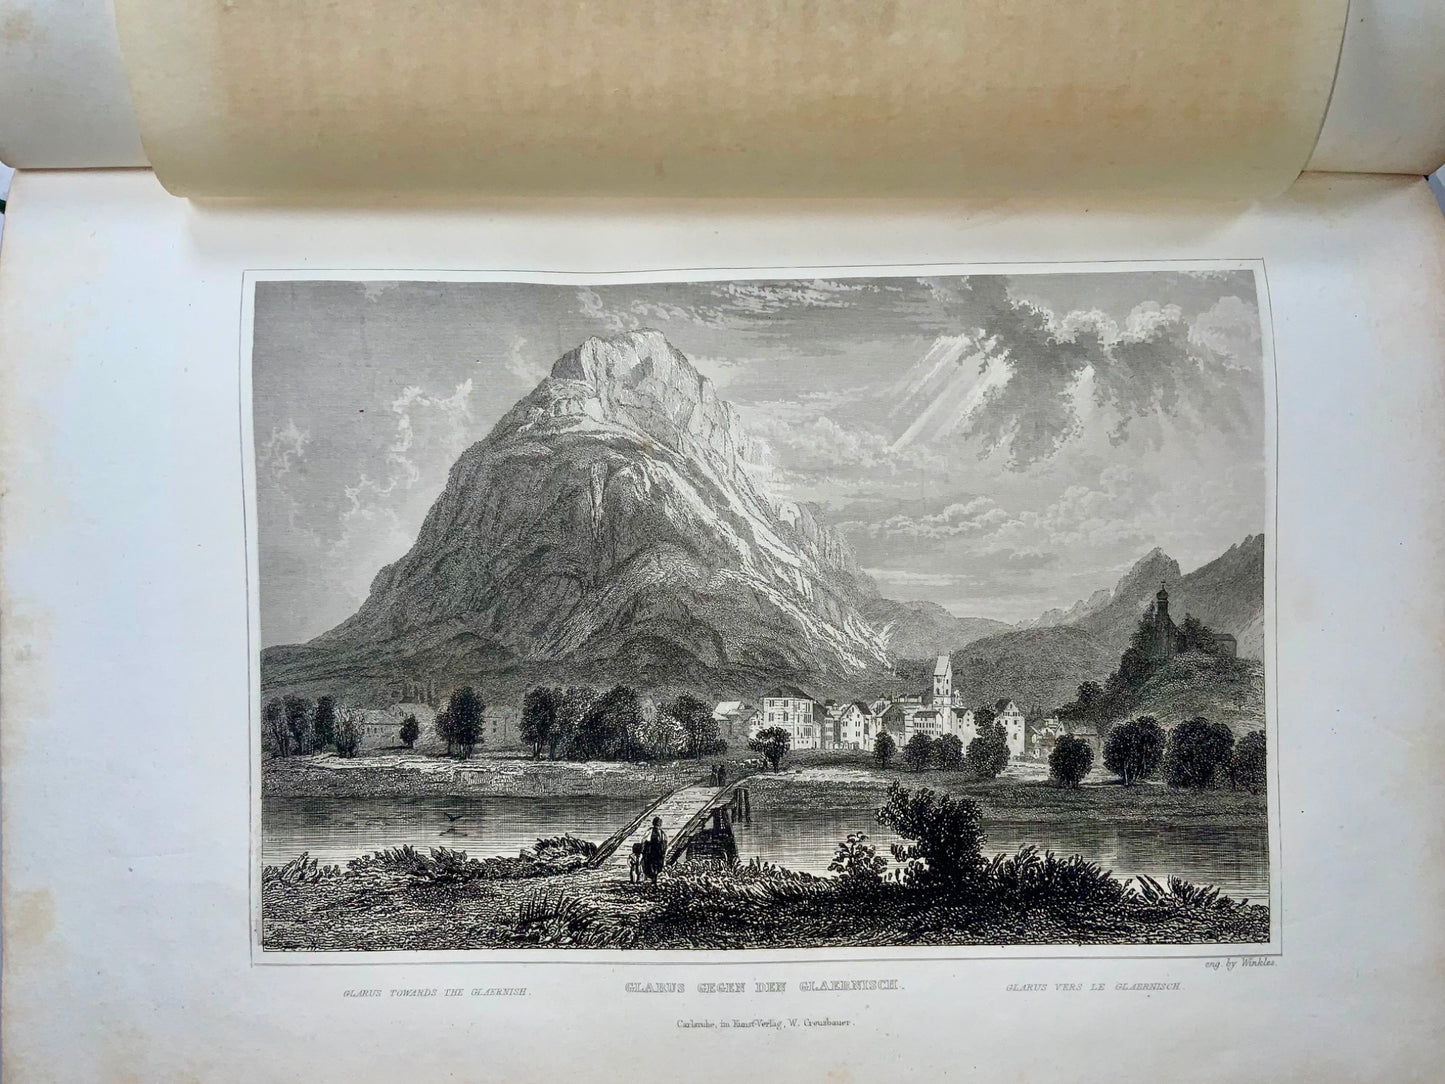 1836-8 H. Zschokke, Svizzera in 85 incisioni su acciaio, 4to, 2 voll